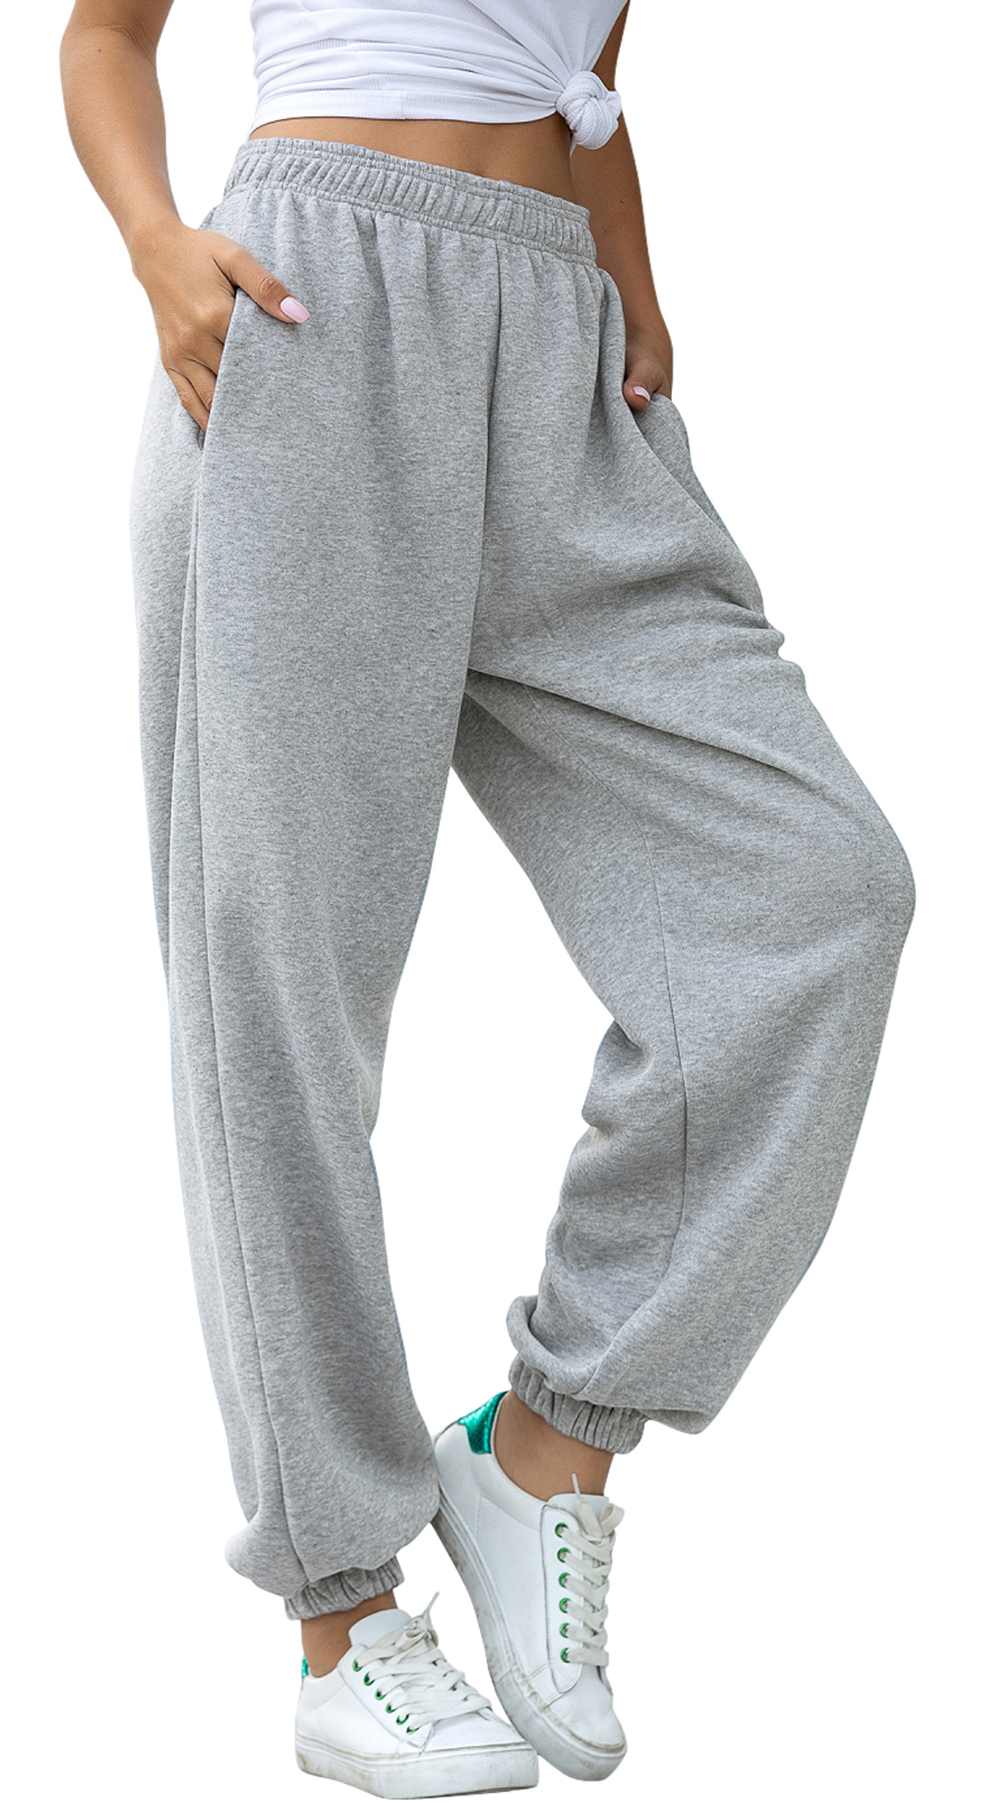 Women's Cinch Bottom Sweatpants Pockets High Waist Sporty Gym Athletic ...